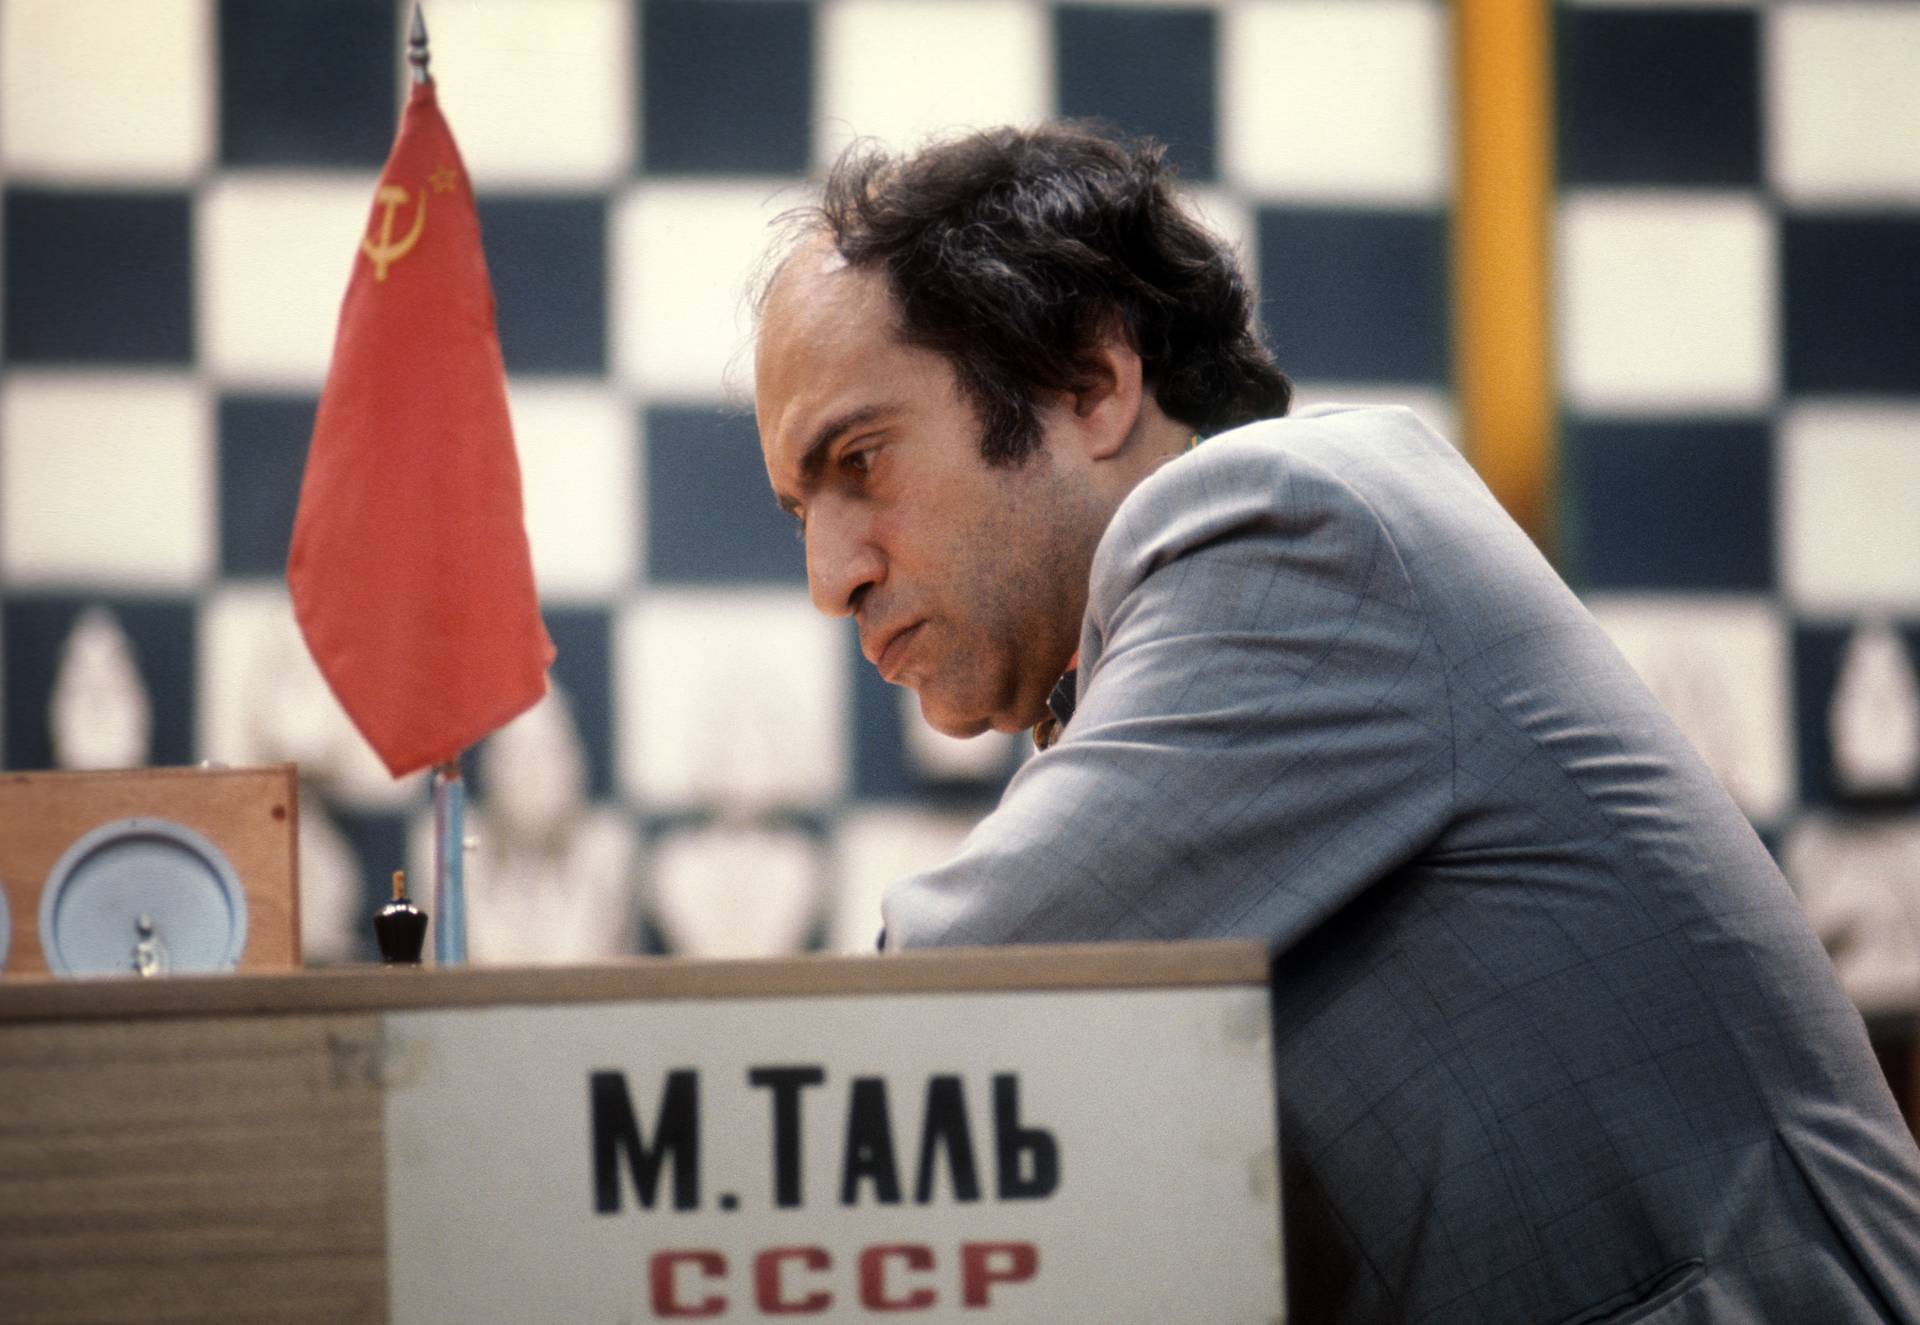 Mikhail Tal at the Leningrad Interzonal, 1973.